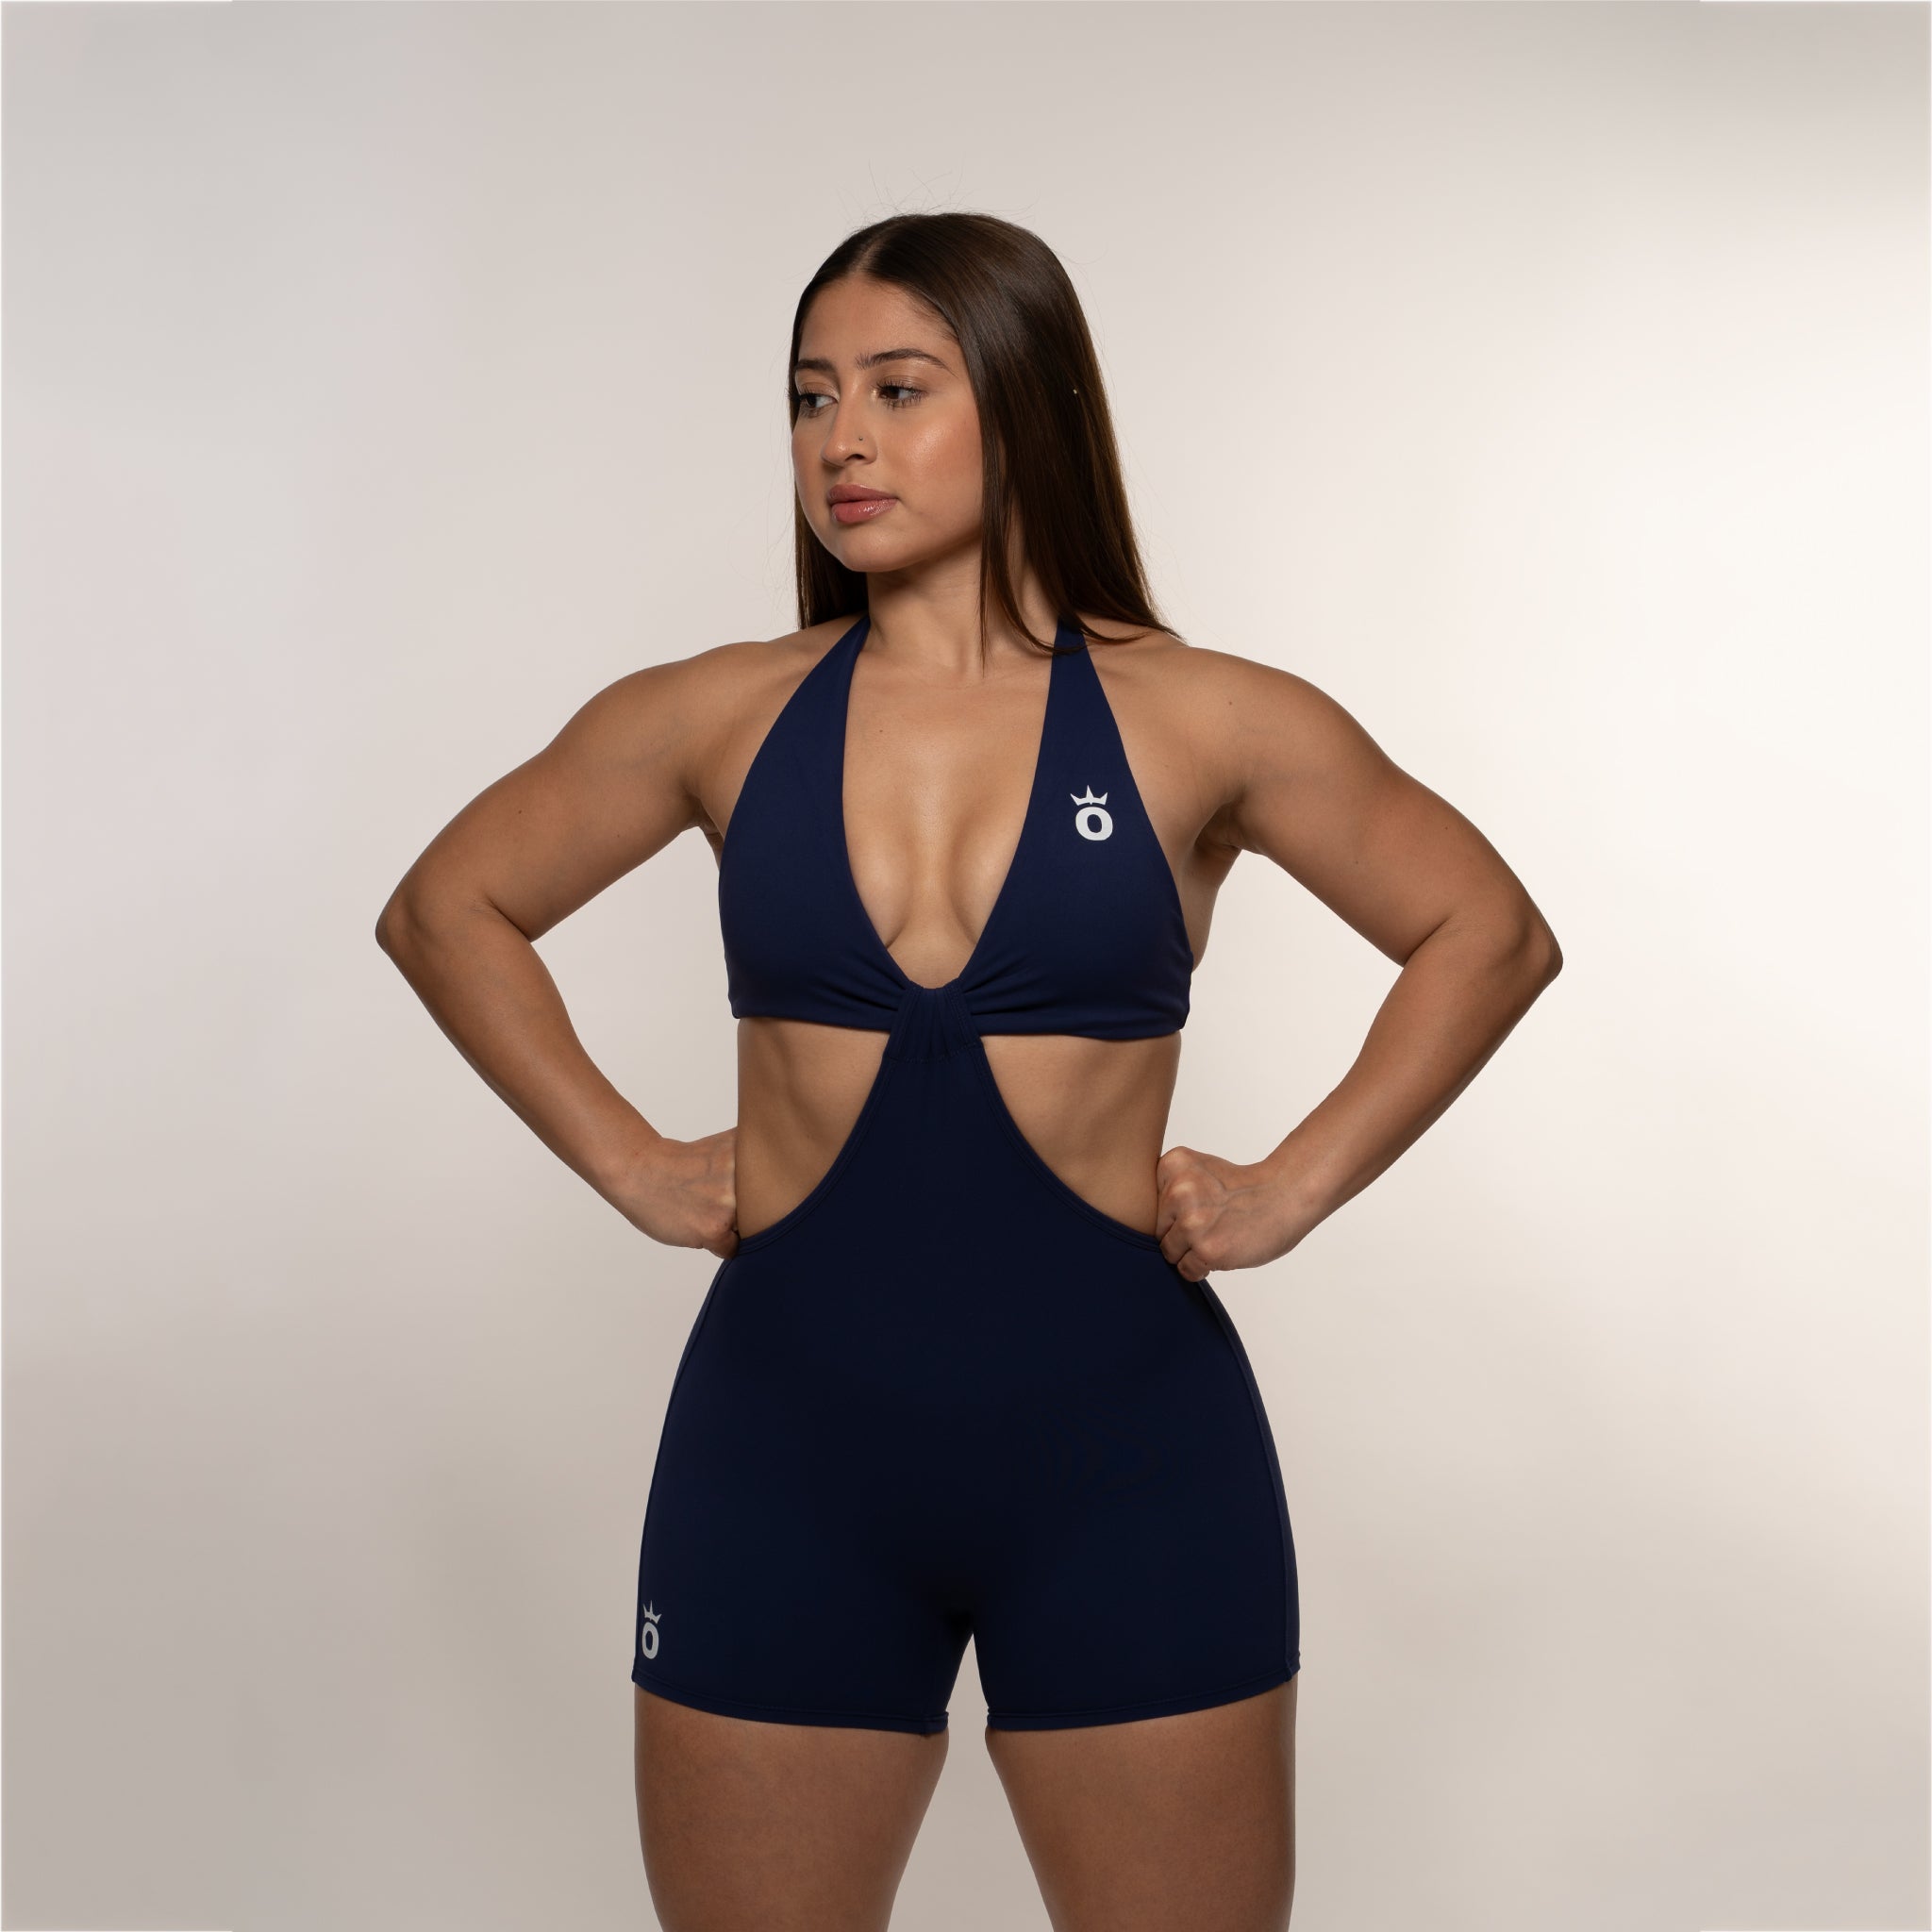 Crush Bodysuit Shorts in Navy Blue: Women's Activewear Essential